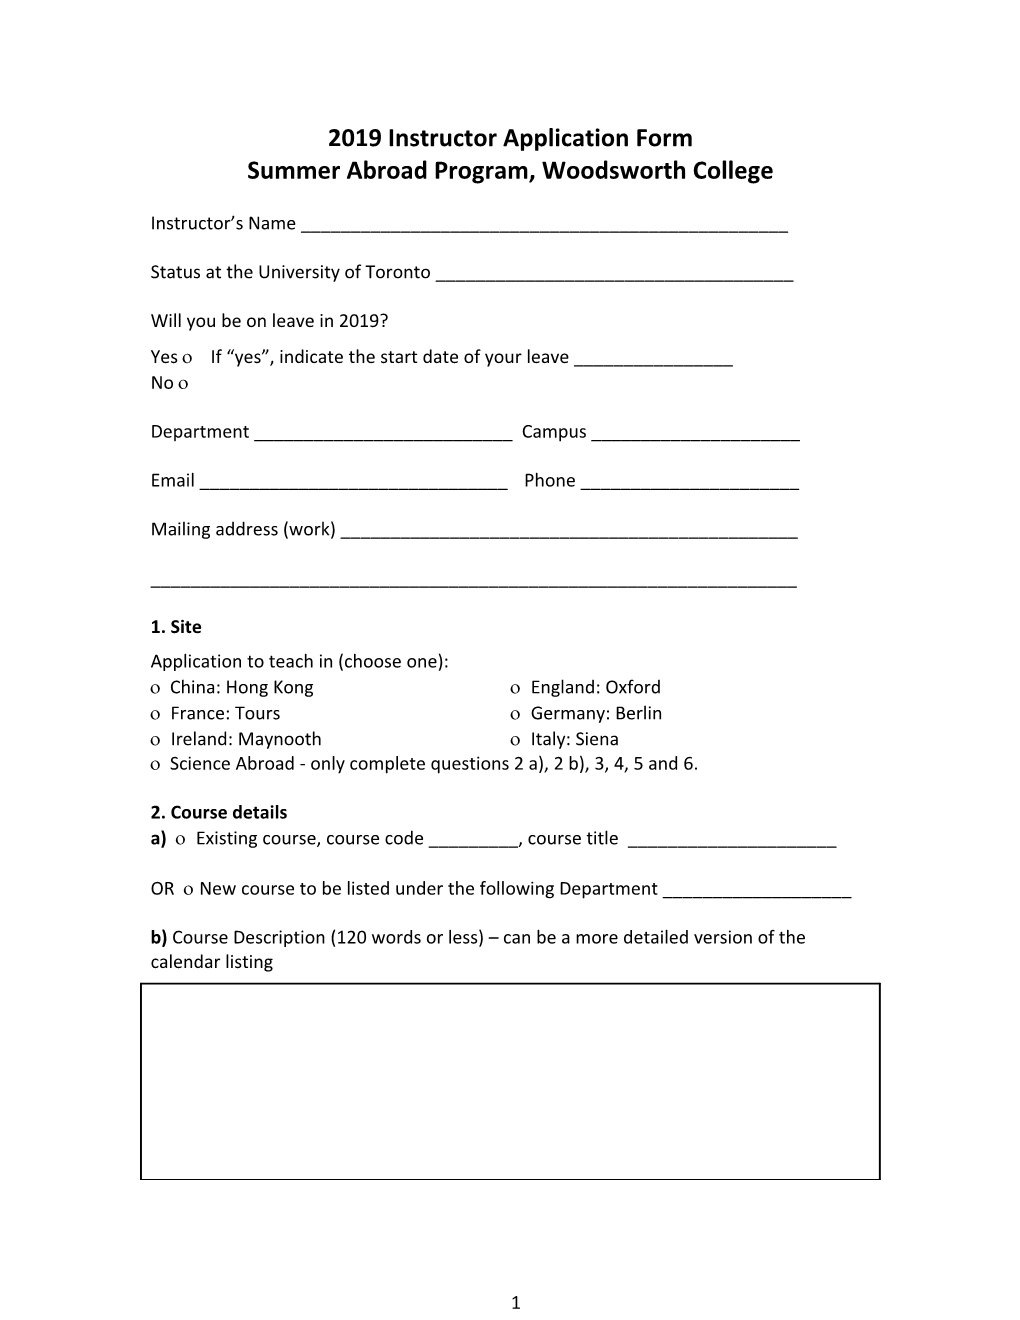 Summer Abroad Program, Woodsworth College